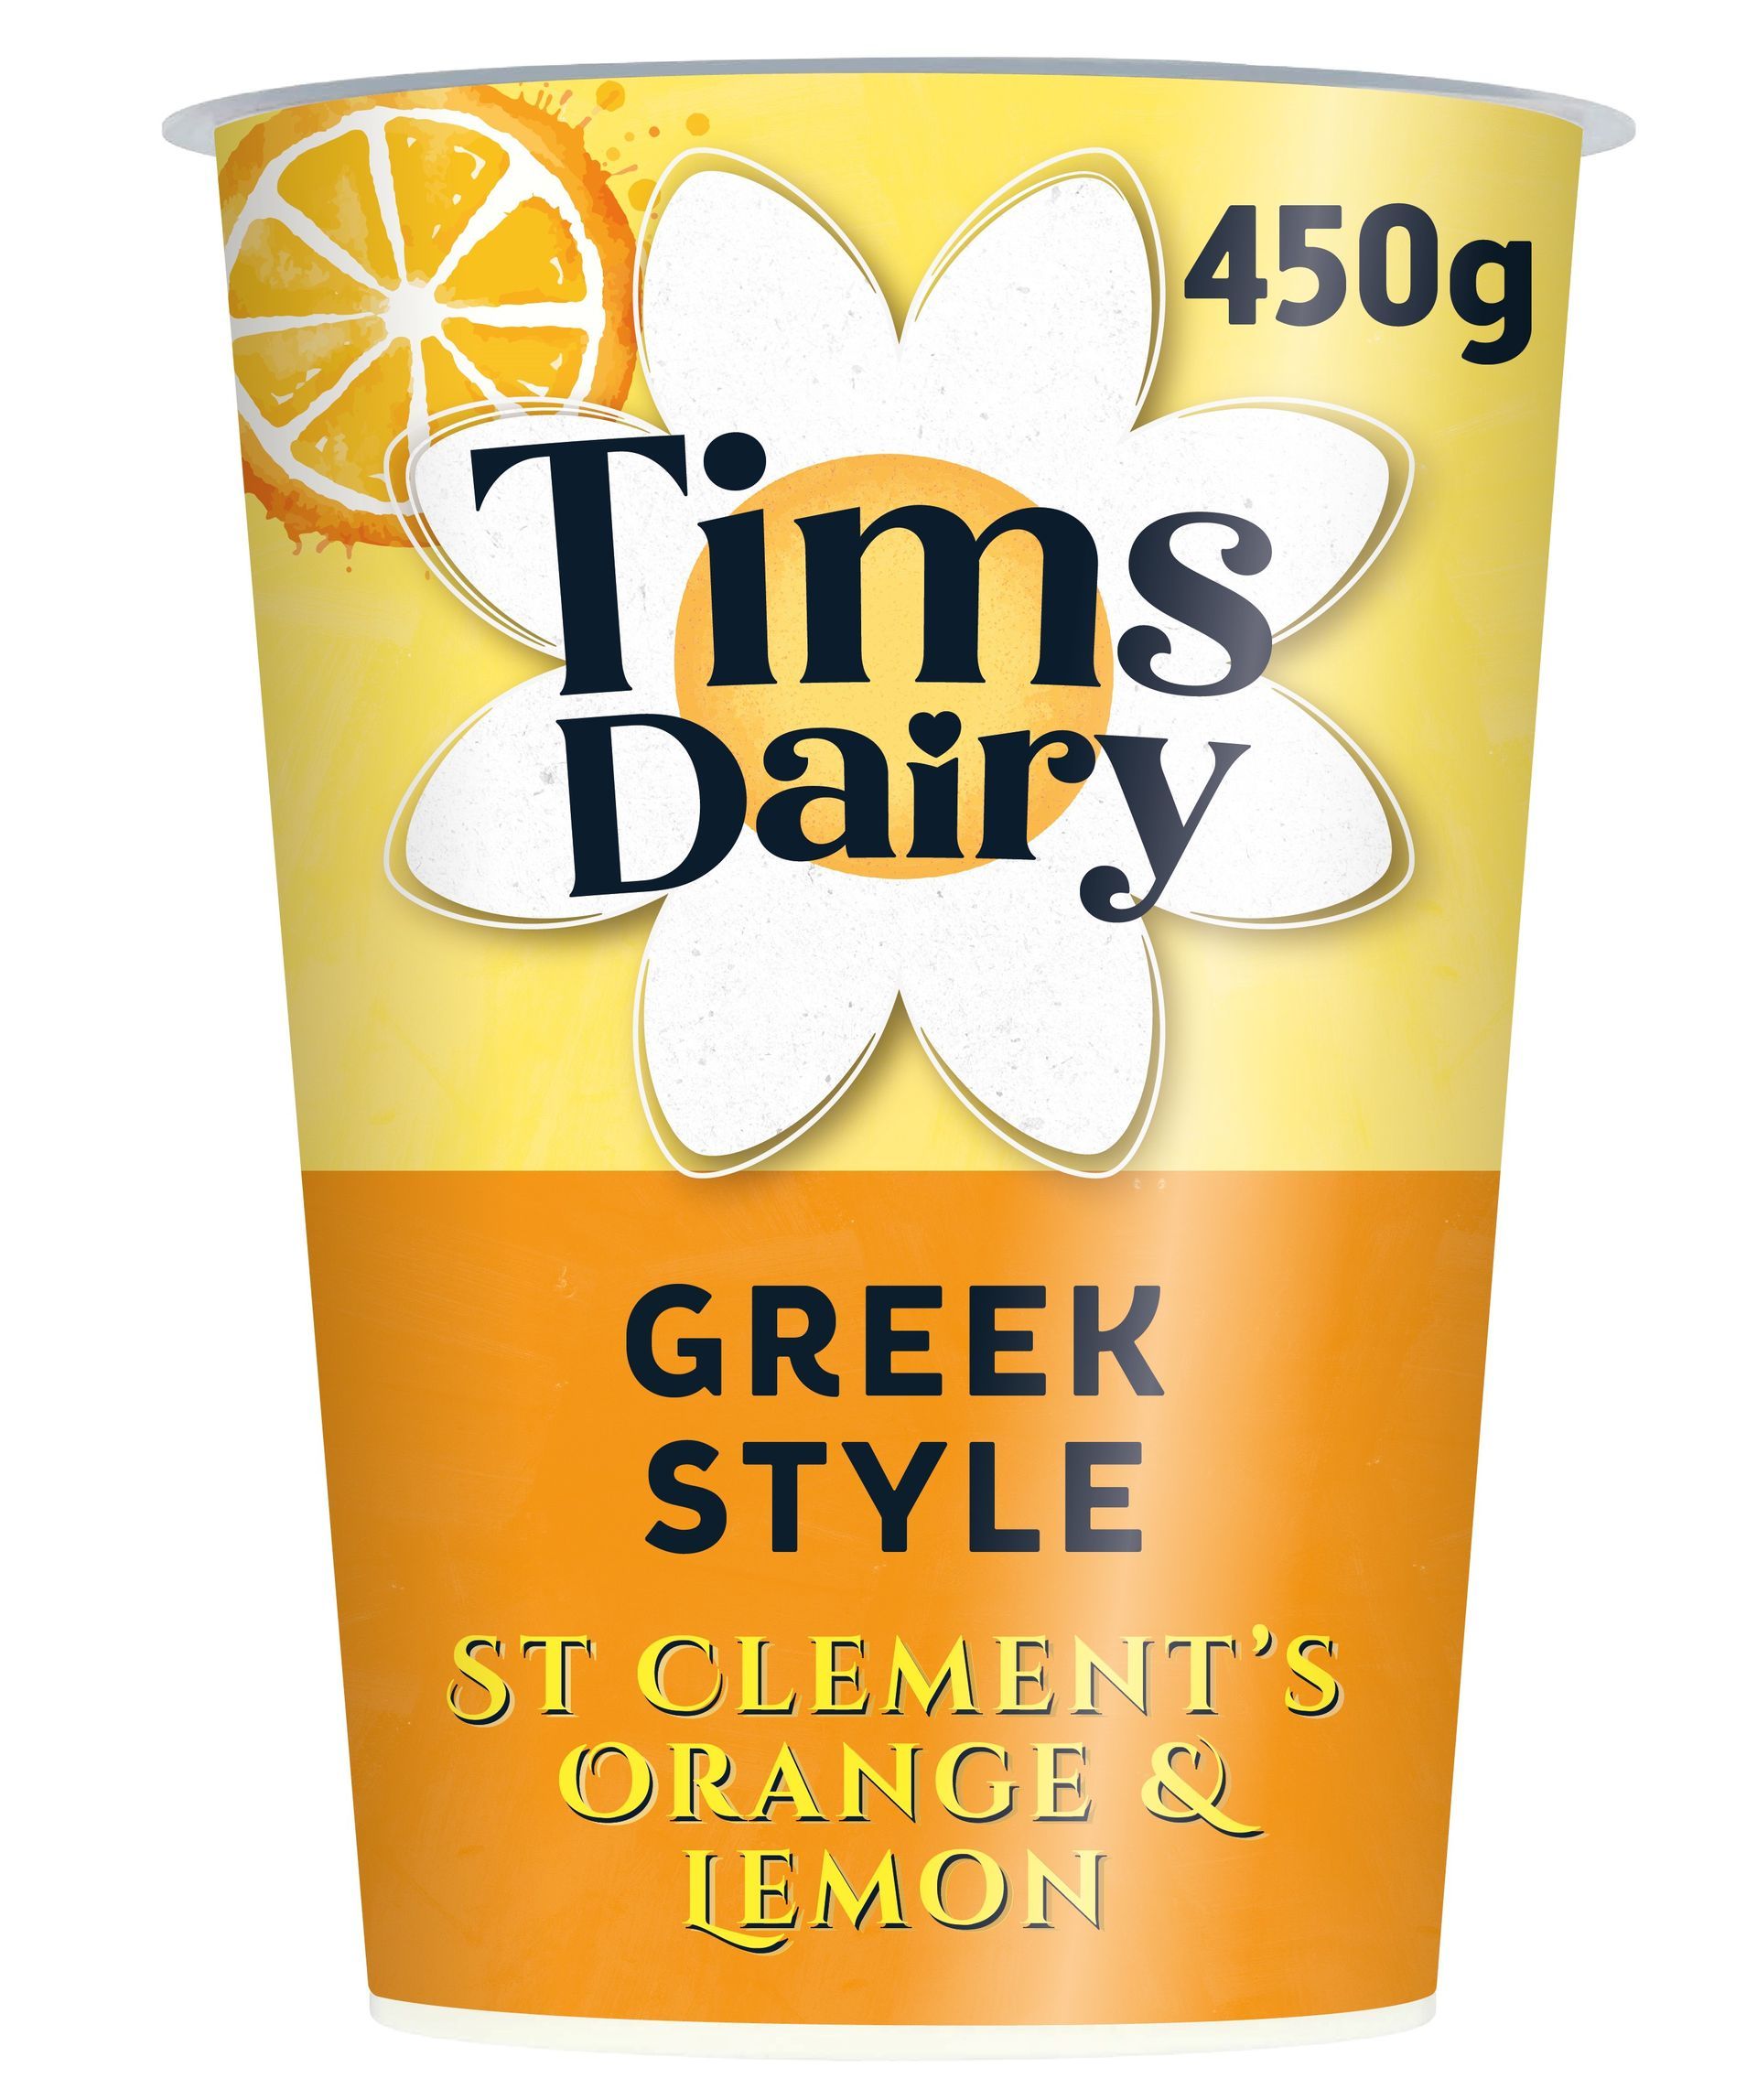 Tims Dairy St Clement's Orange & Lemon Greek Style Yogurt